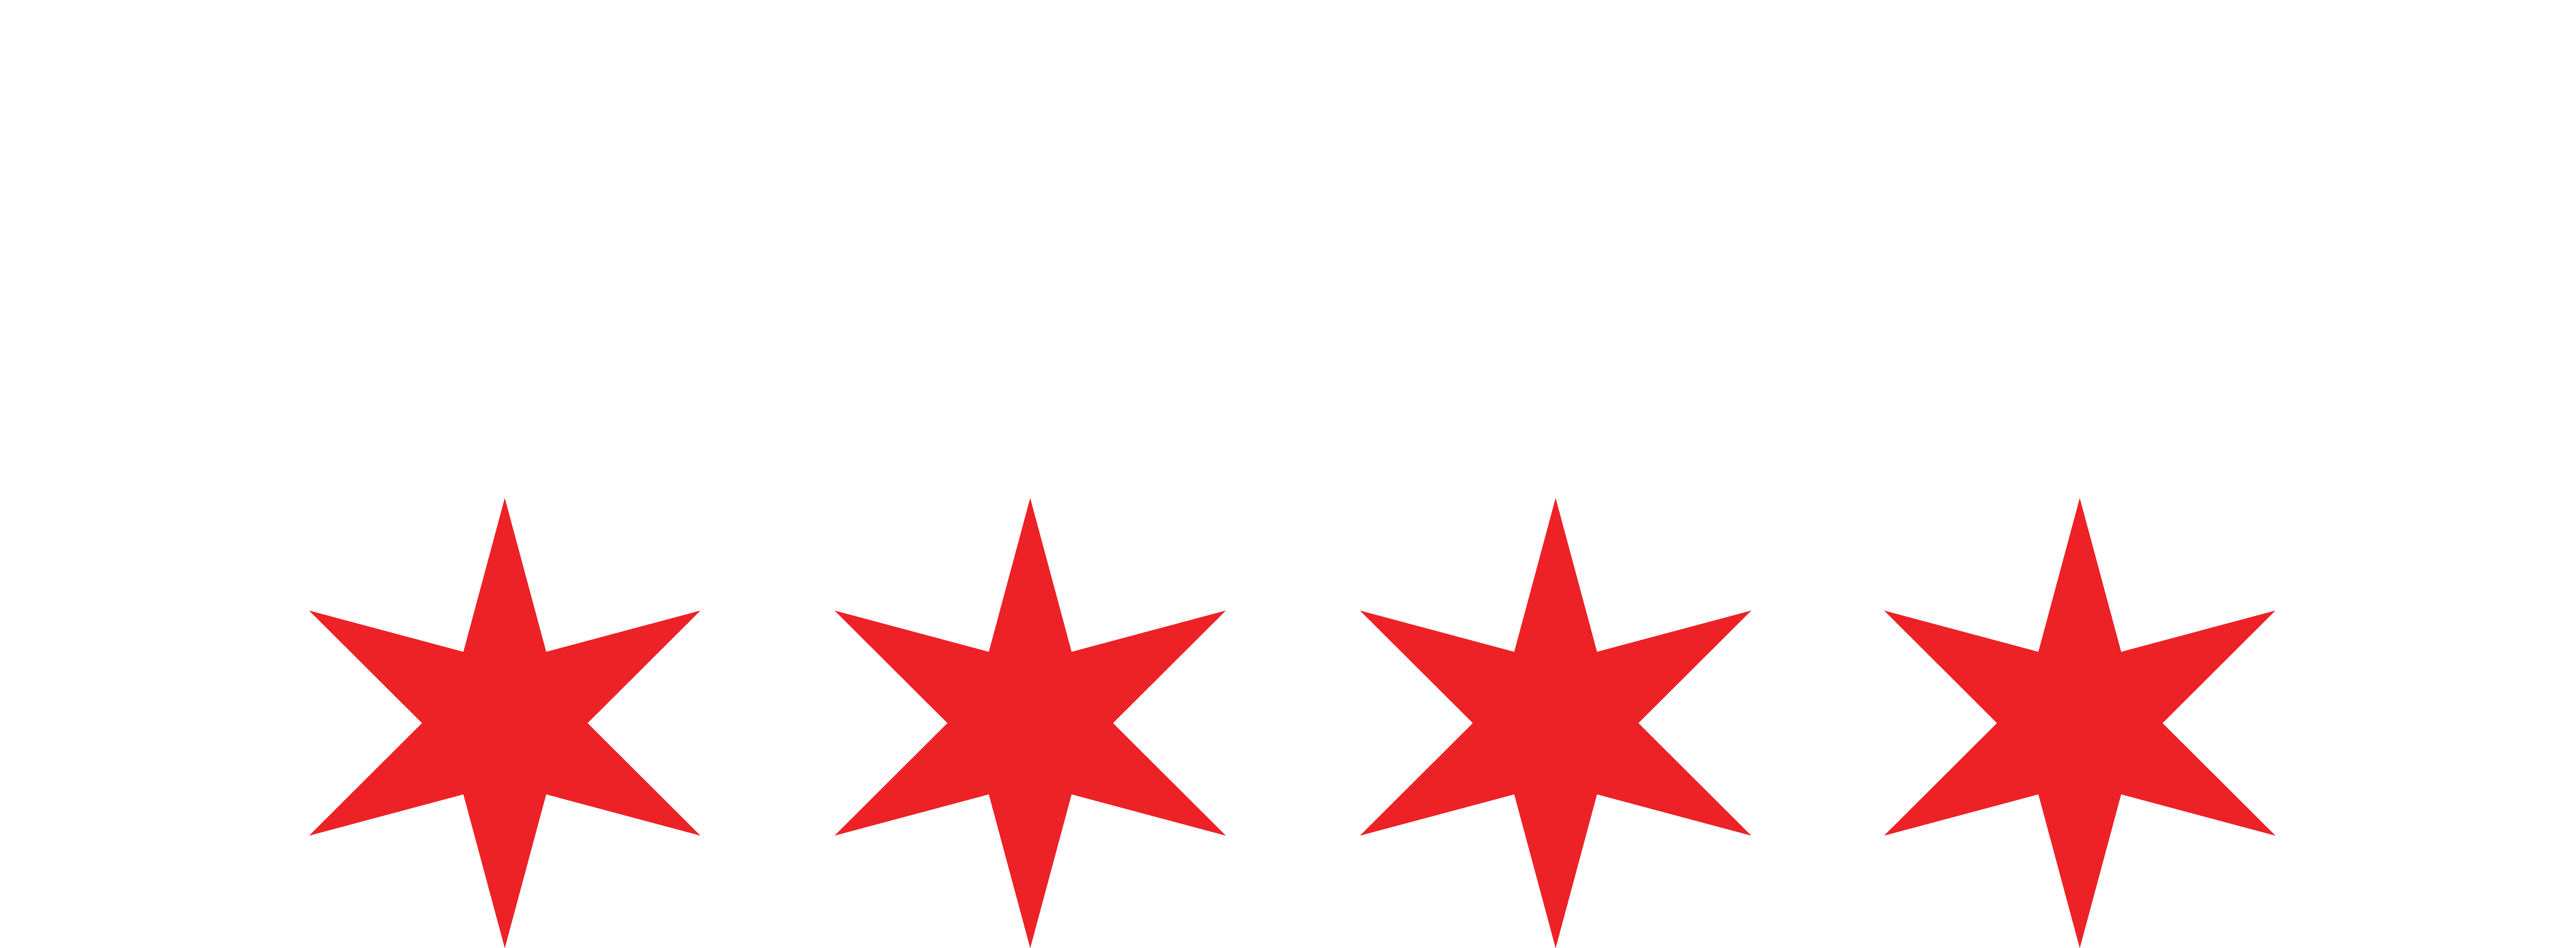 Windy City Pie Logo - Chicago Flag (8438x3121)